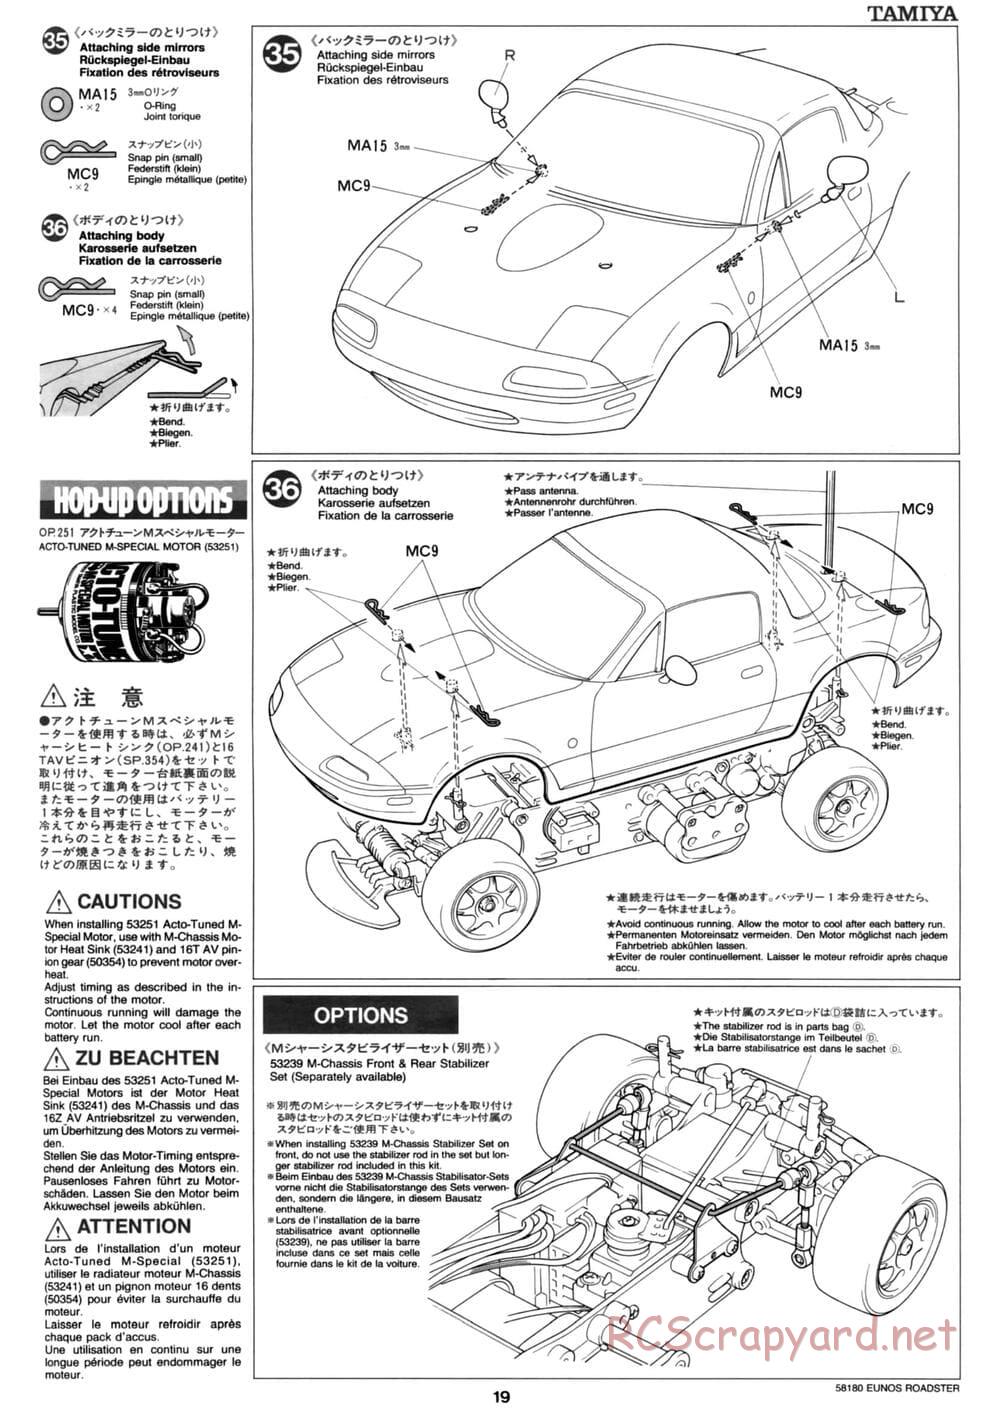 Tamiya - Eunos Roadster - M02M Chassis - Manual - Page 19